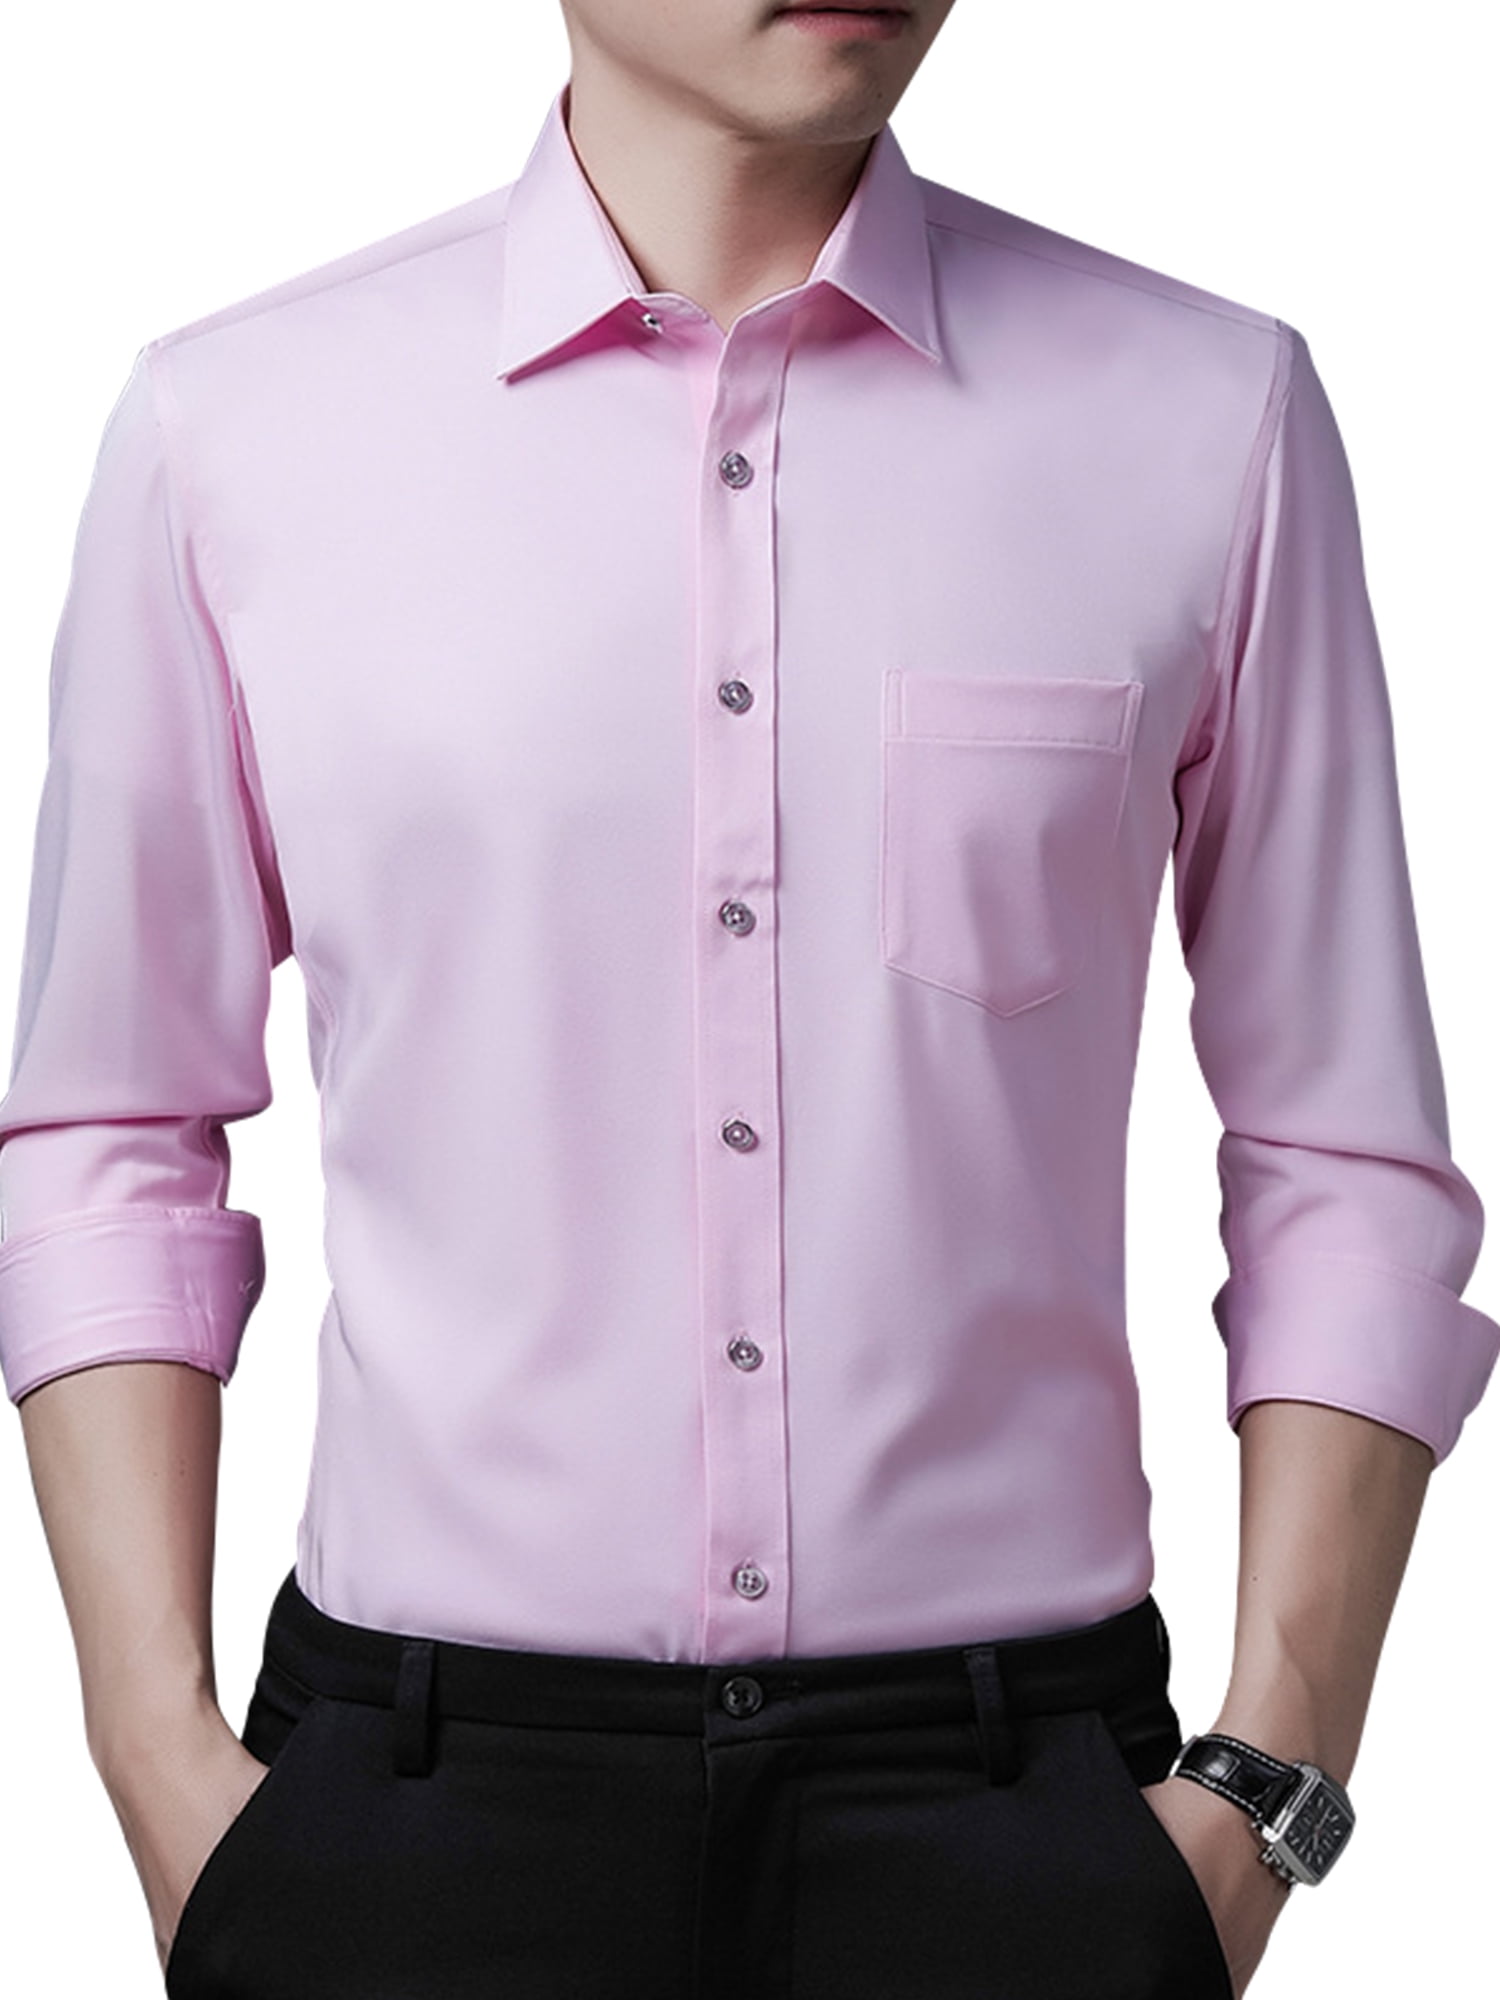 Fashion Formal Shirts Long Sleeve Shirts H&M Long Sleeve Shirt pink business style 